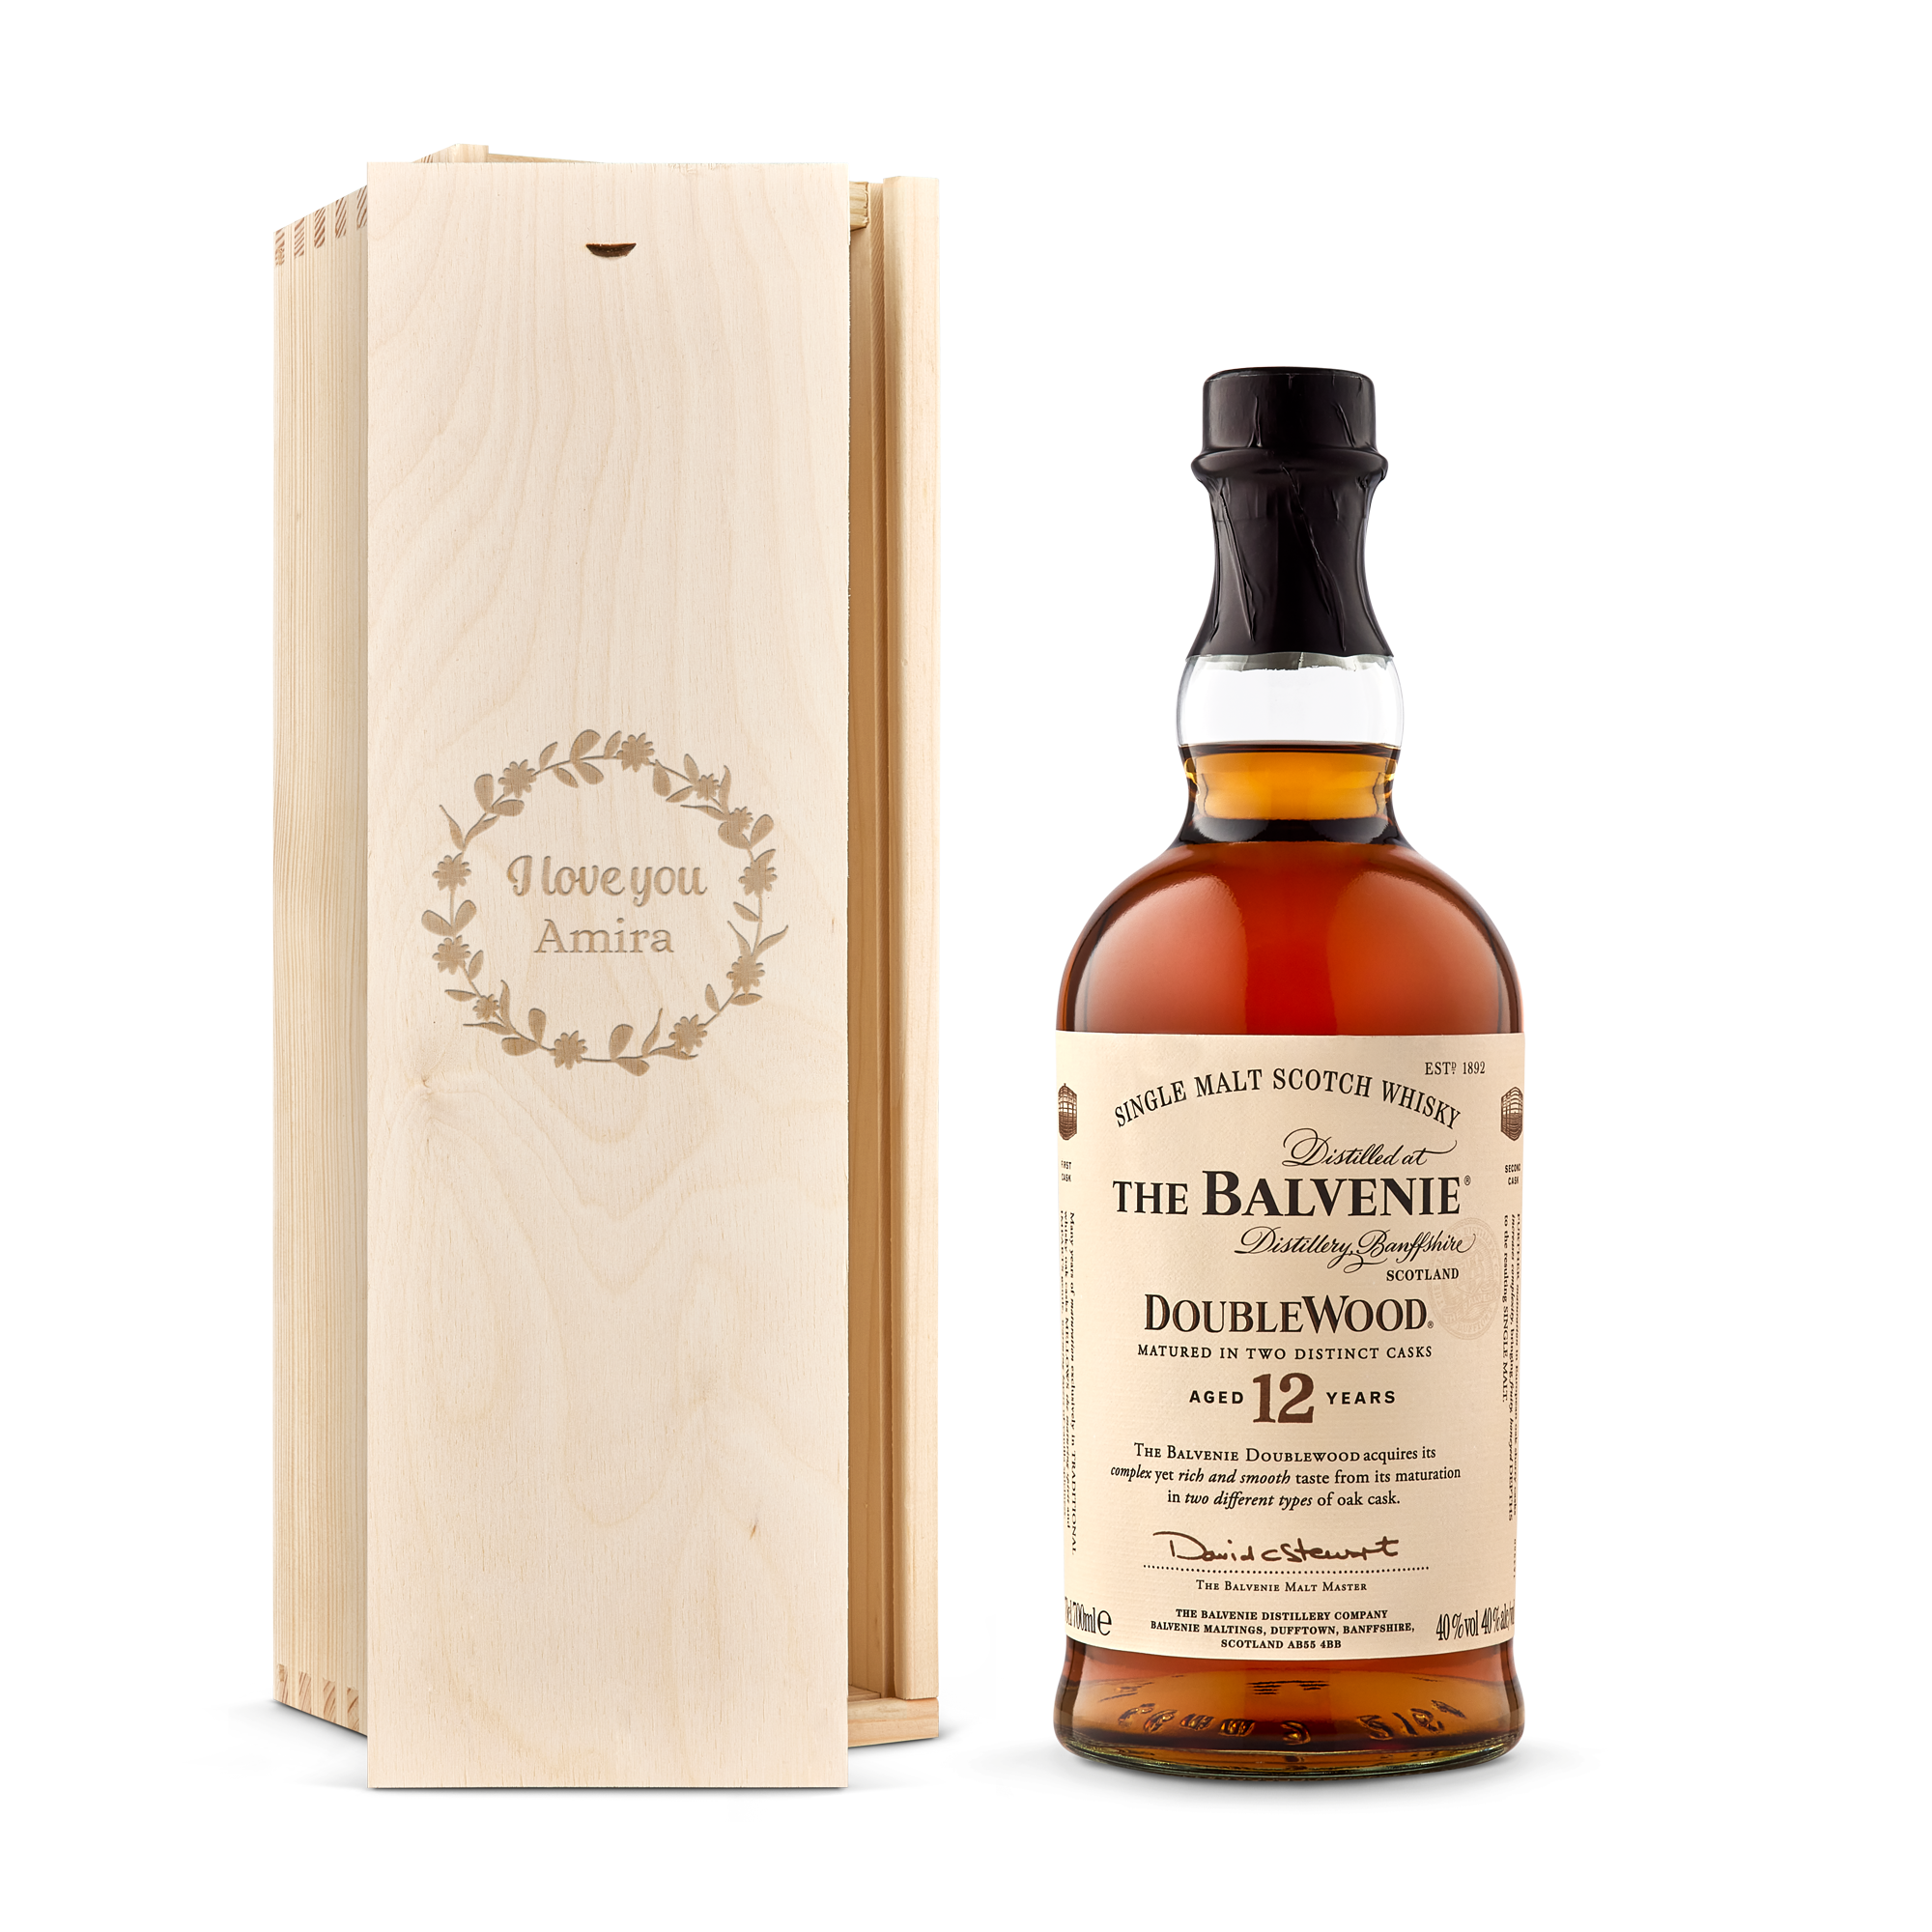 The Balvenie whisky